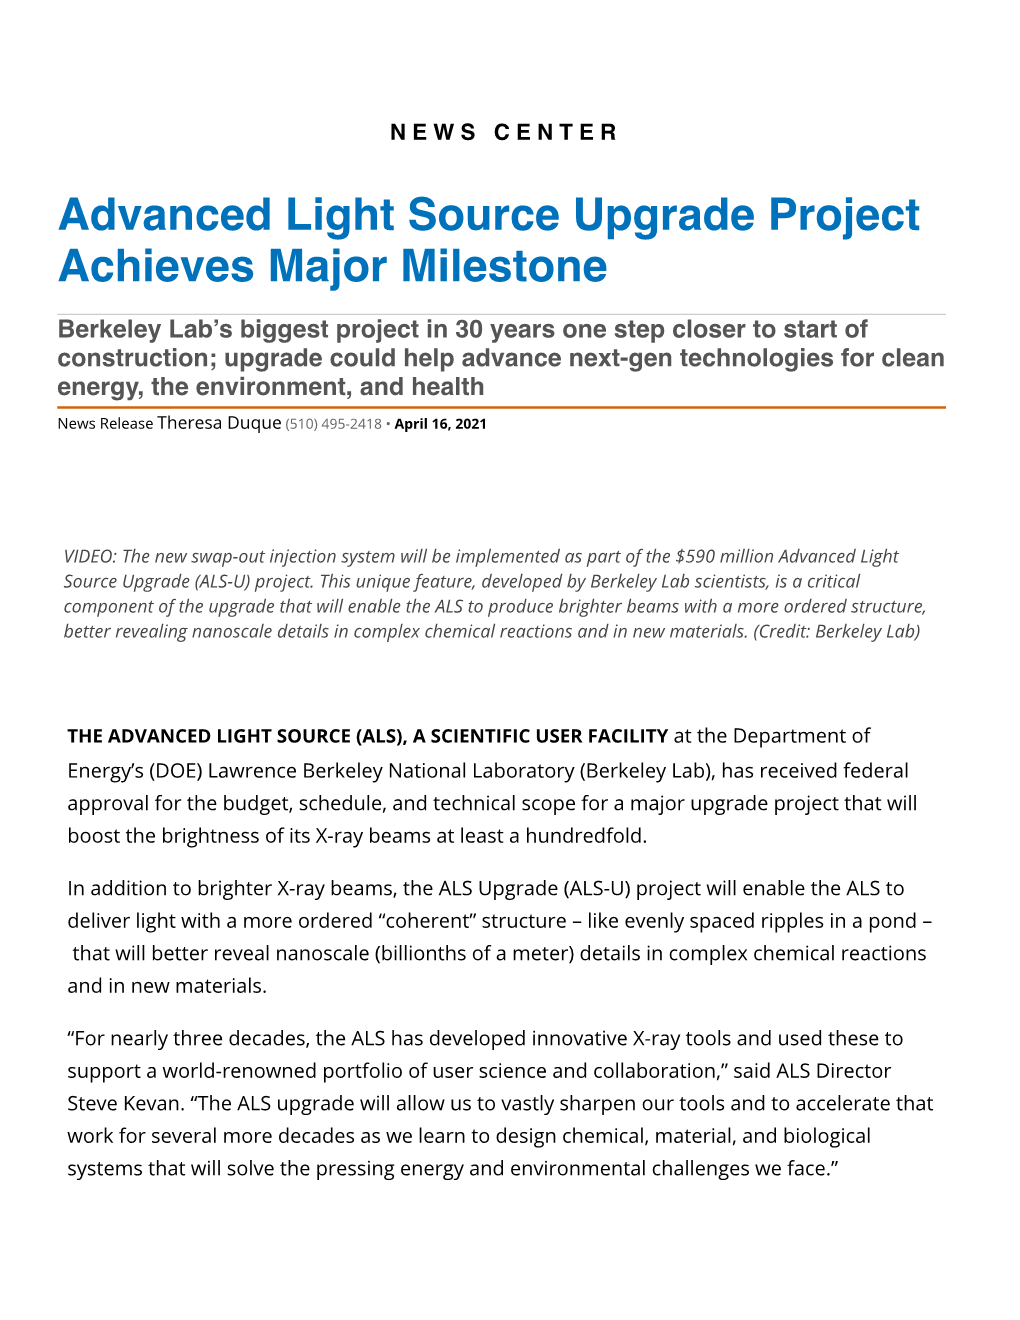 Advanced Light Source Upgrade Project Achieves Major Milestone